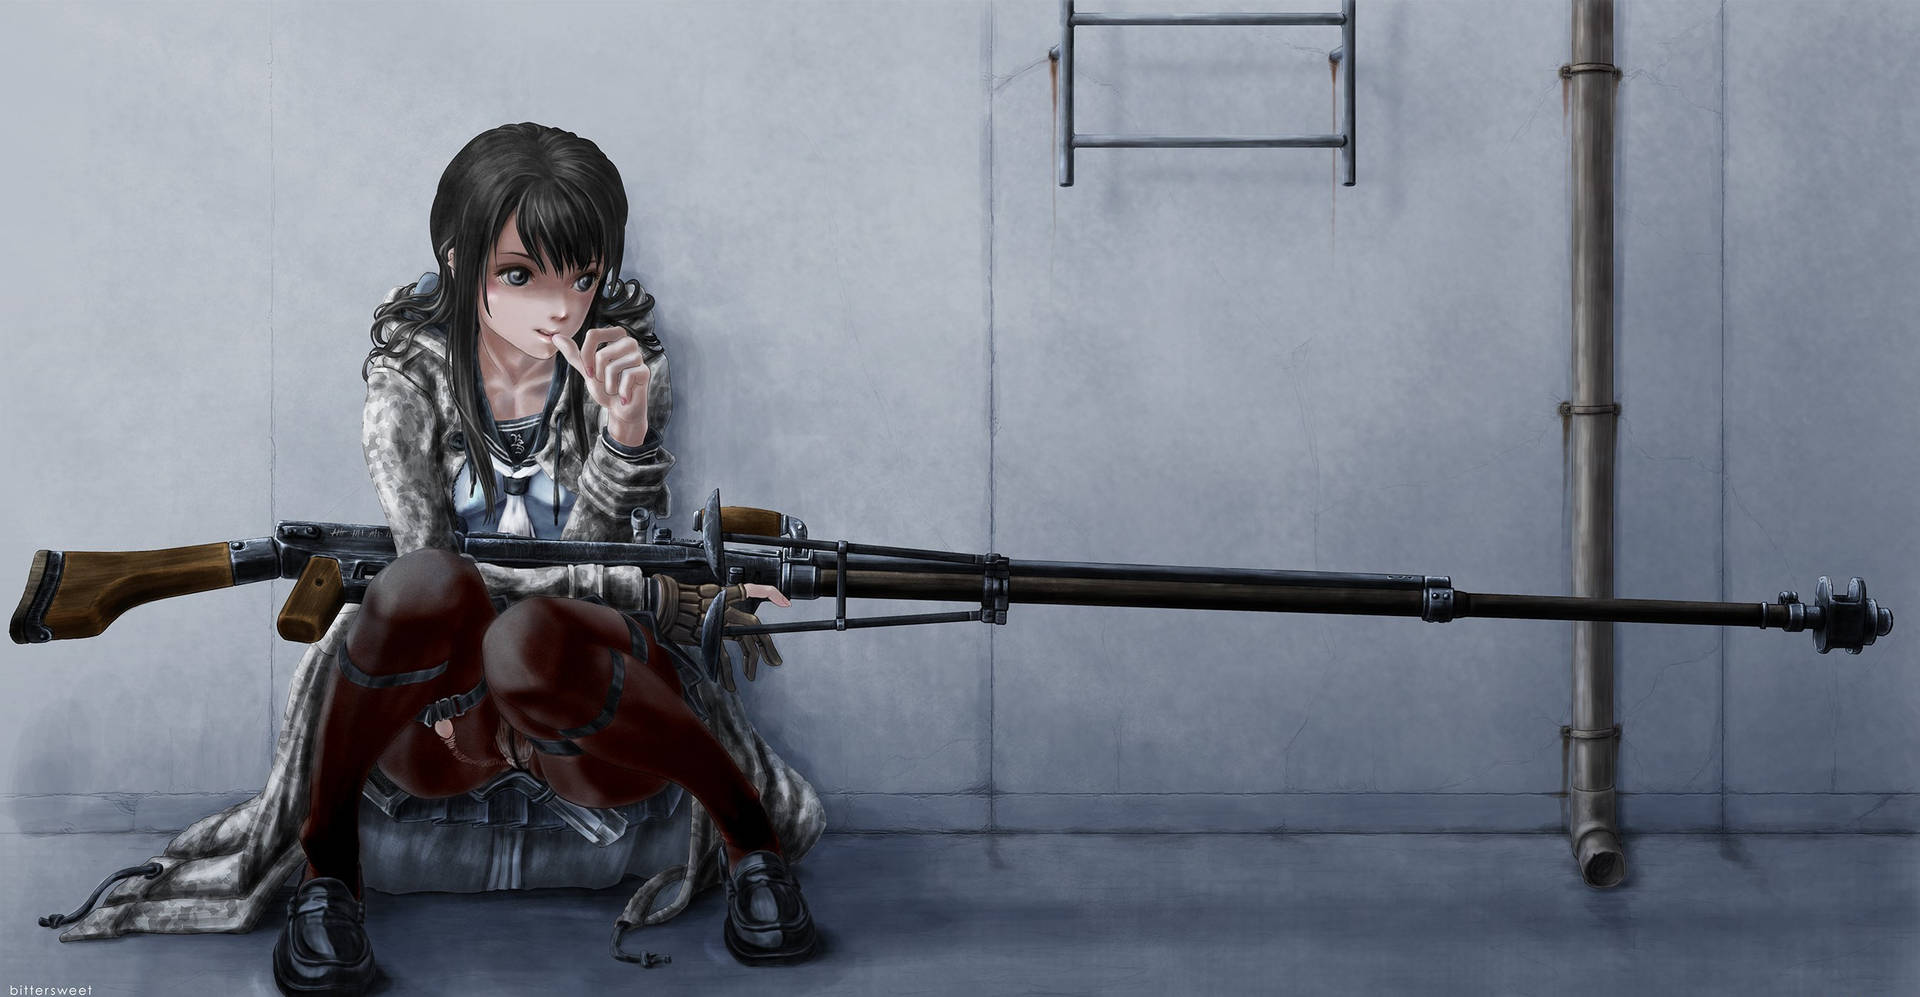 Anime Art Girl With Gun Background